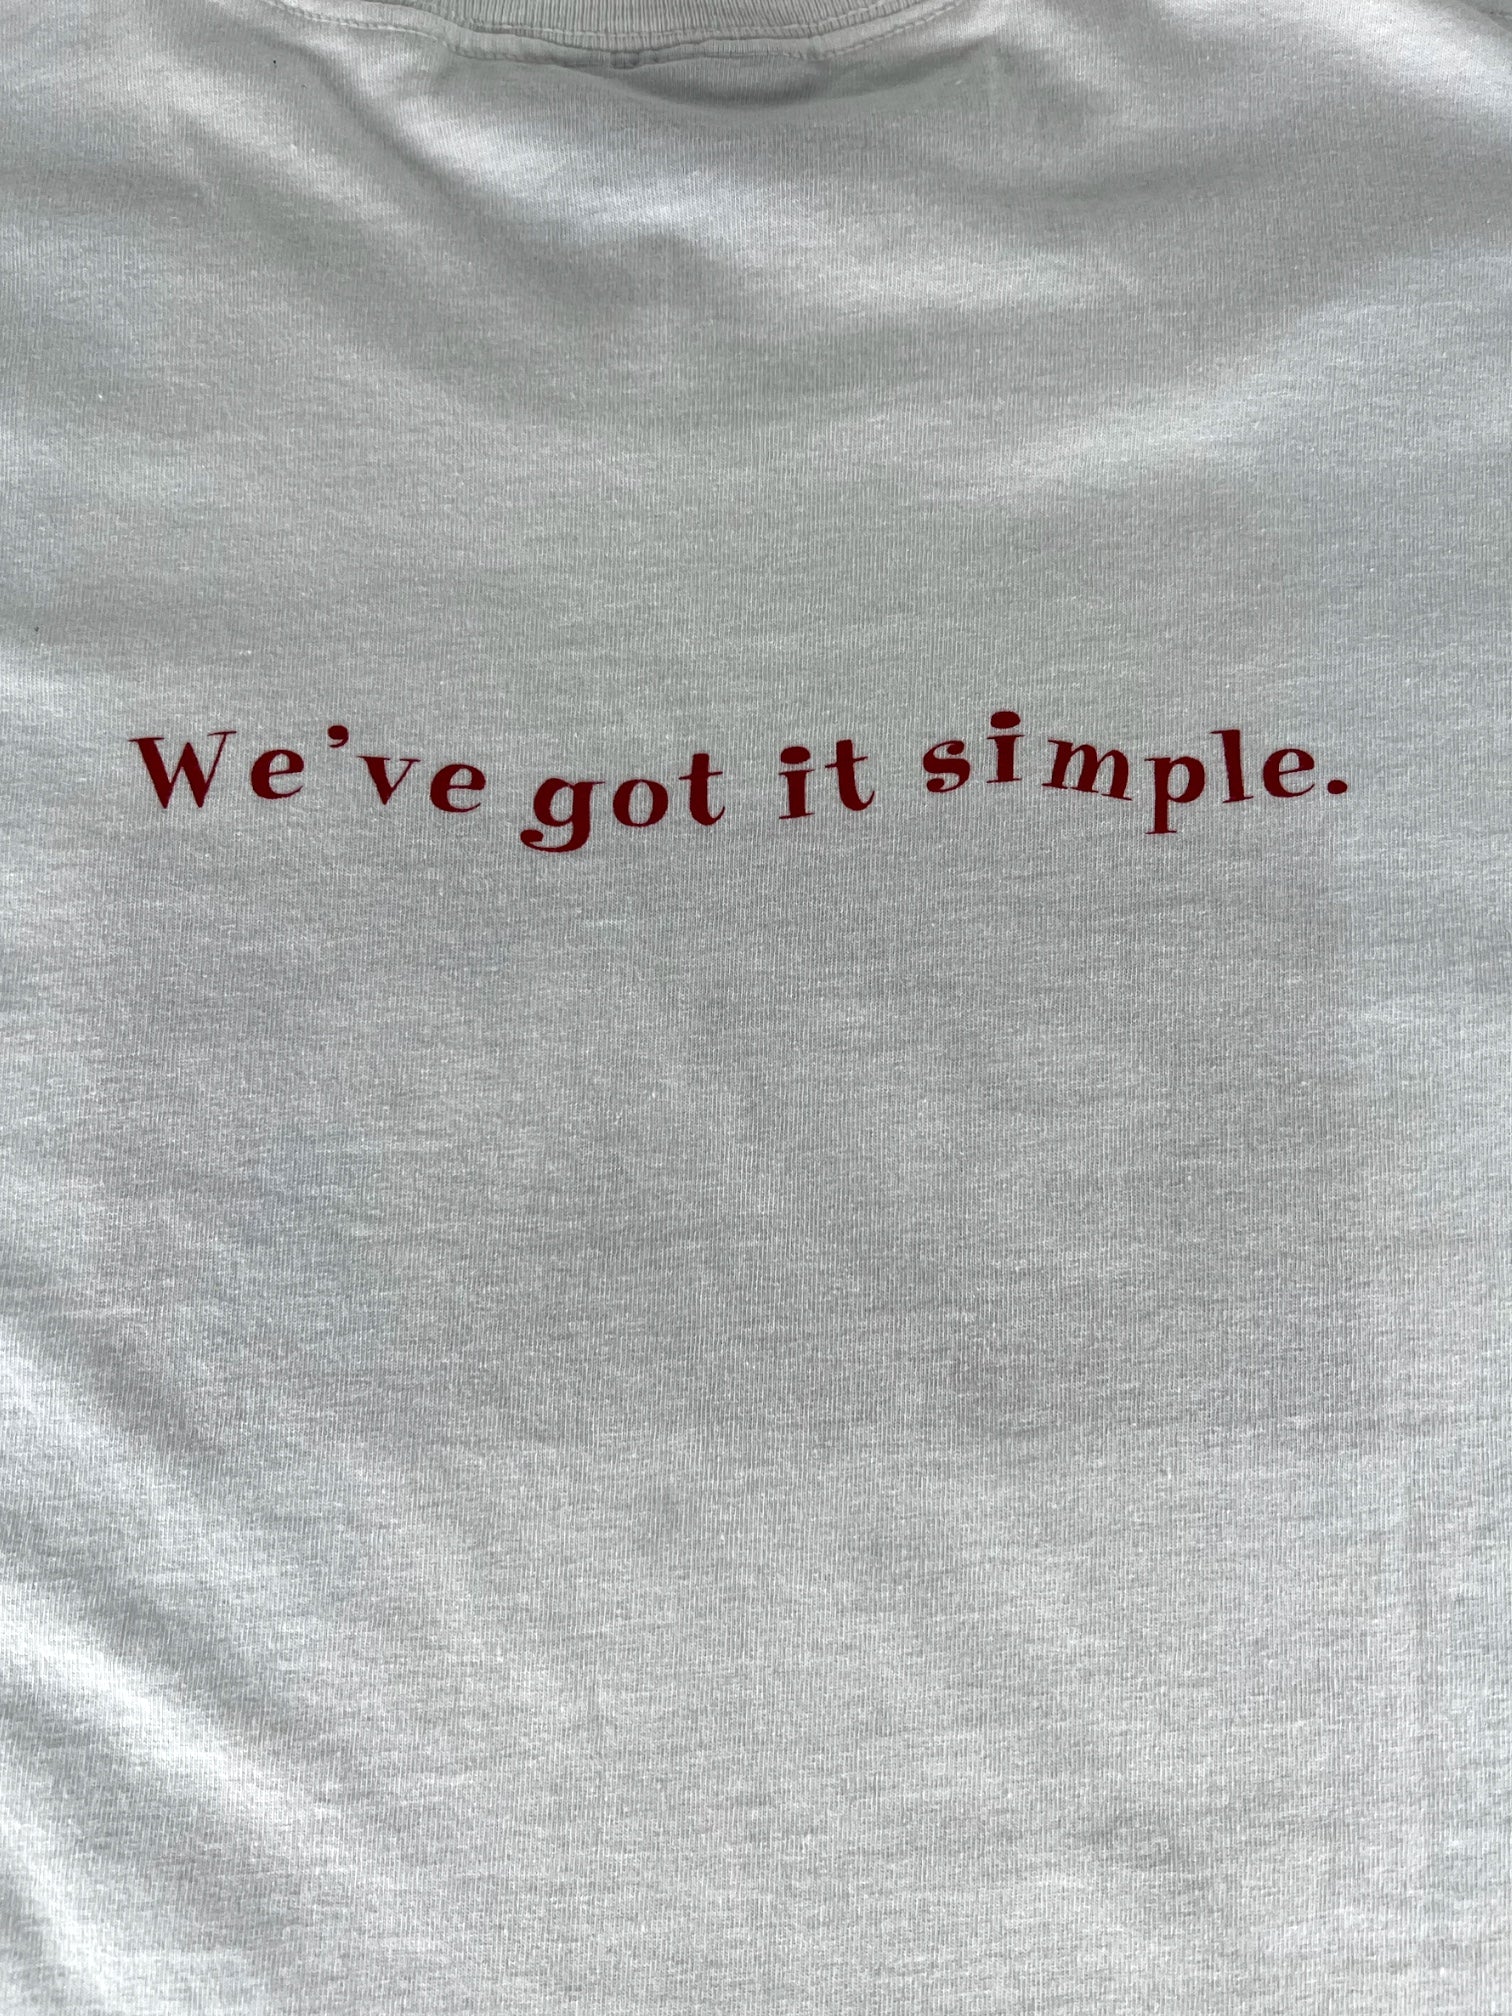 1996 Phish Simple t shirt XL